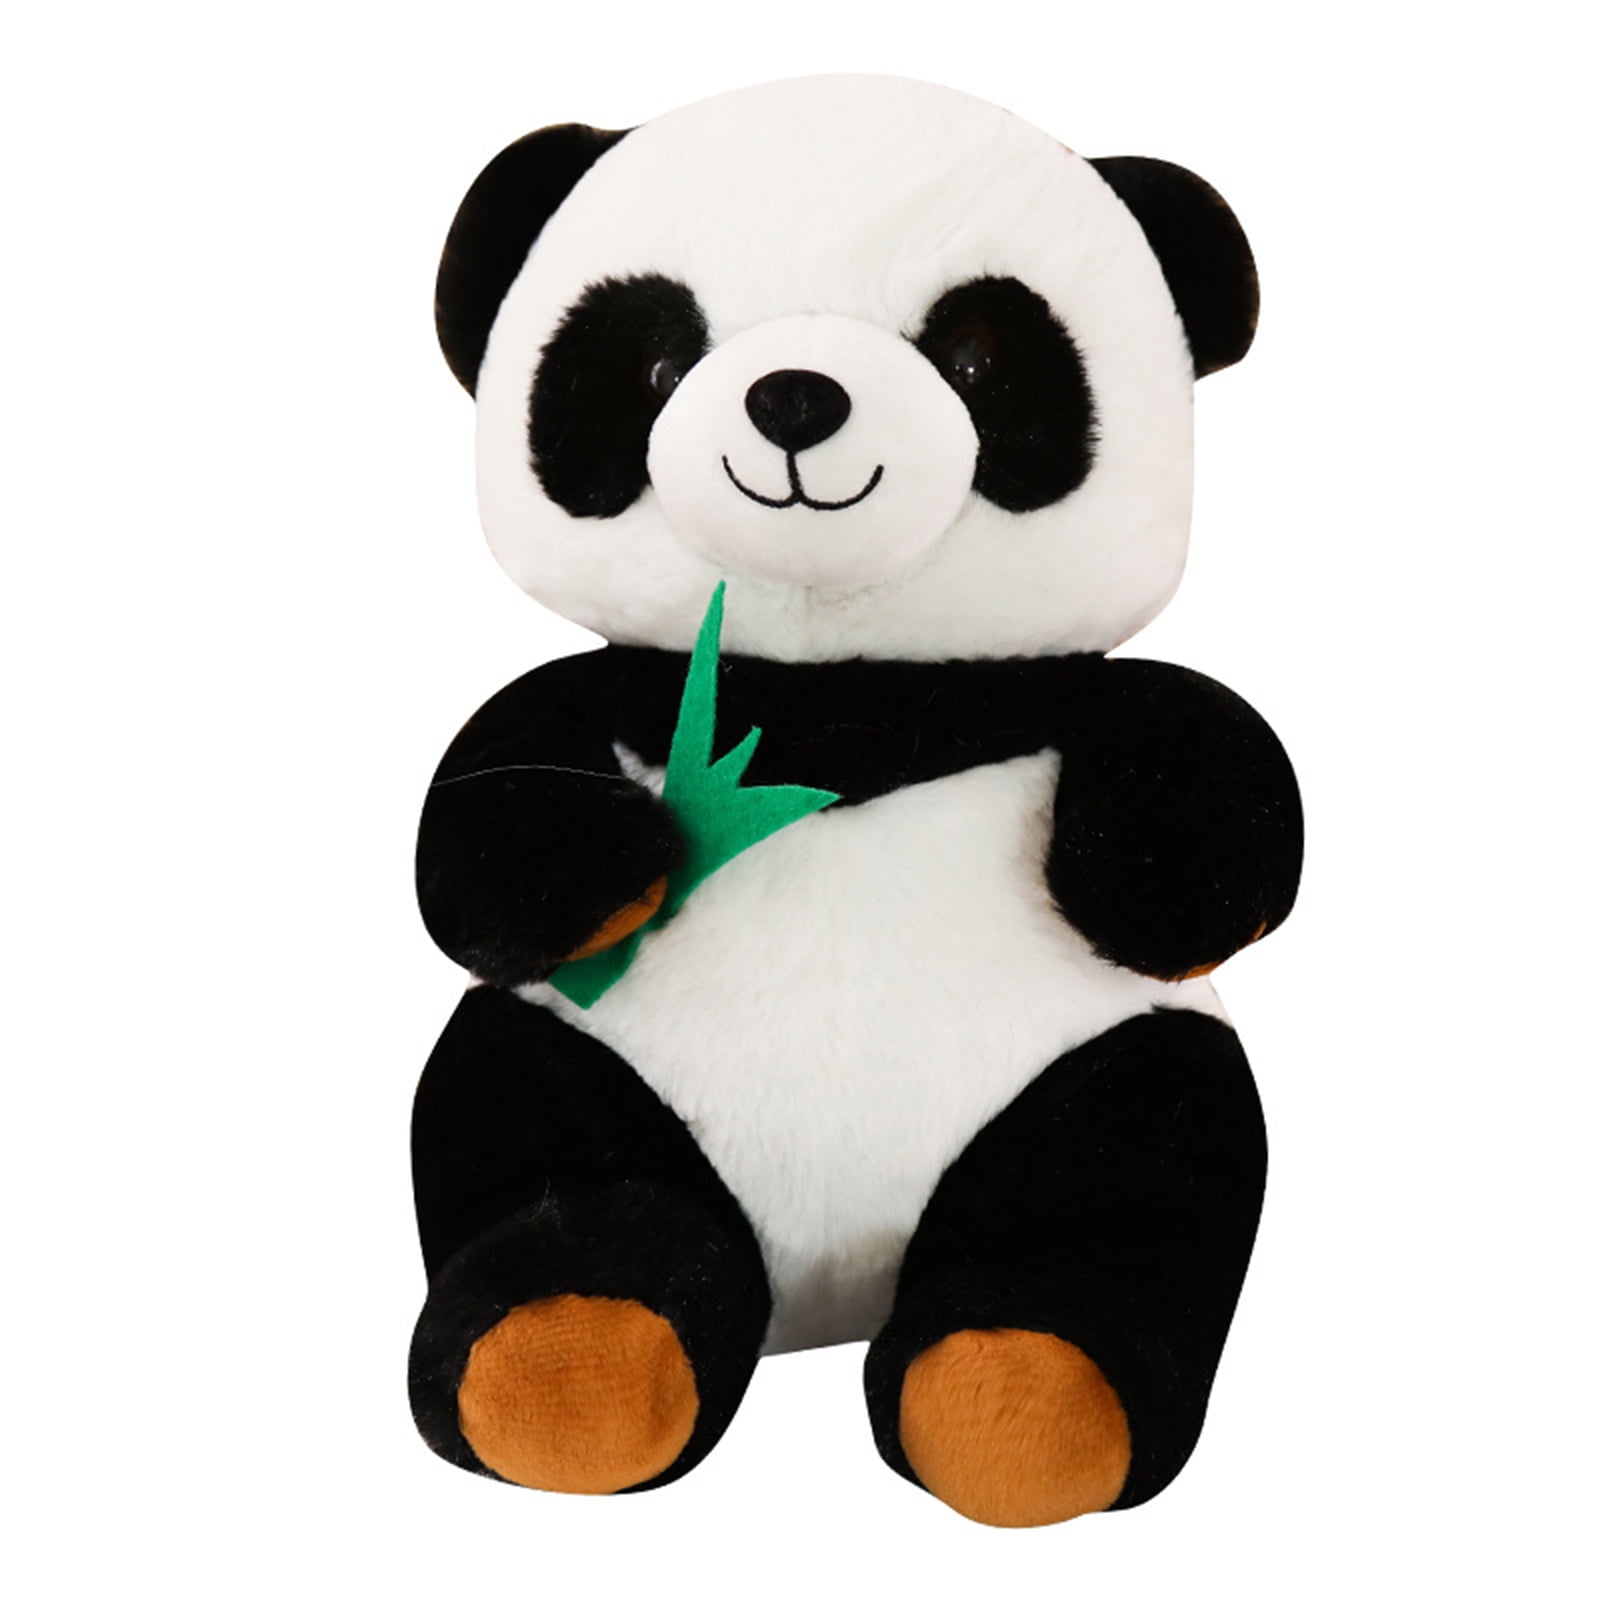 1x Cute Big Eyed Panda Plush Stuffed Toy Dolls Soft Kids Xmas Gift Decorate 35cm 